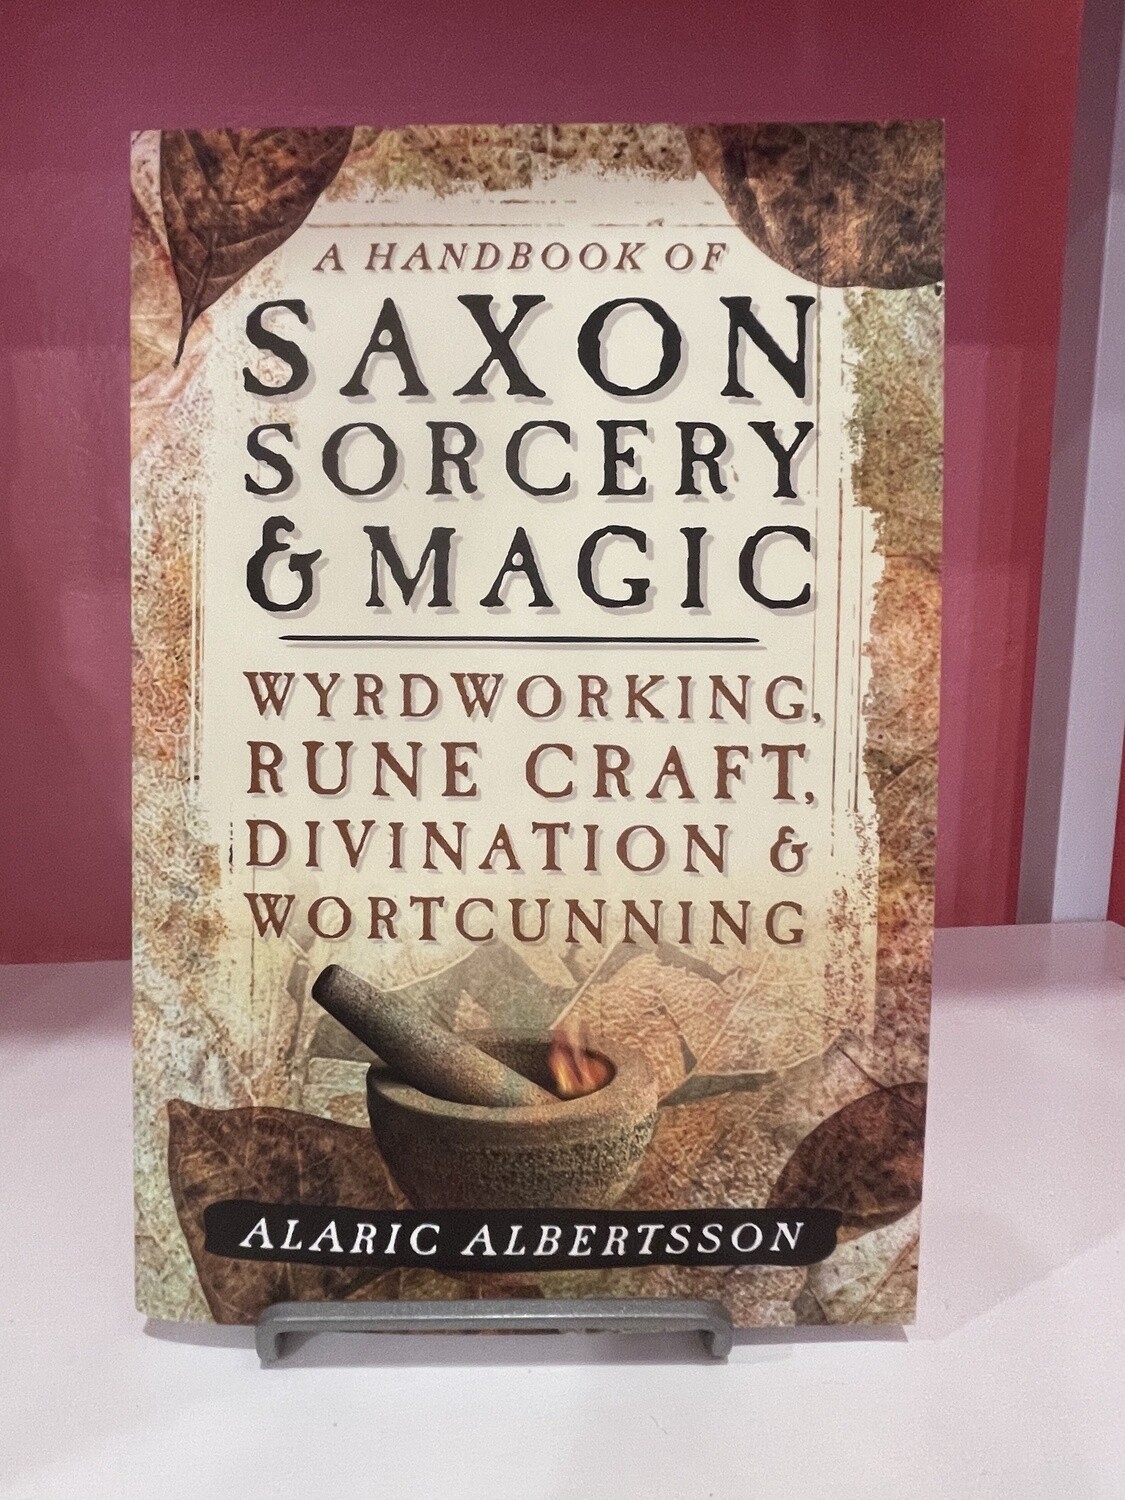 A Handbook of Saxon Sorcery & Magic